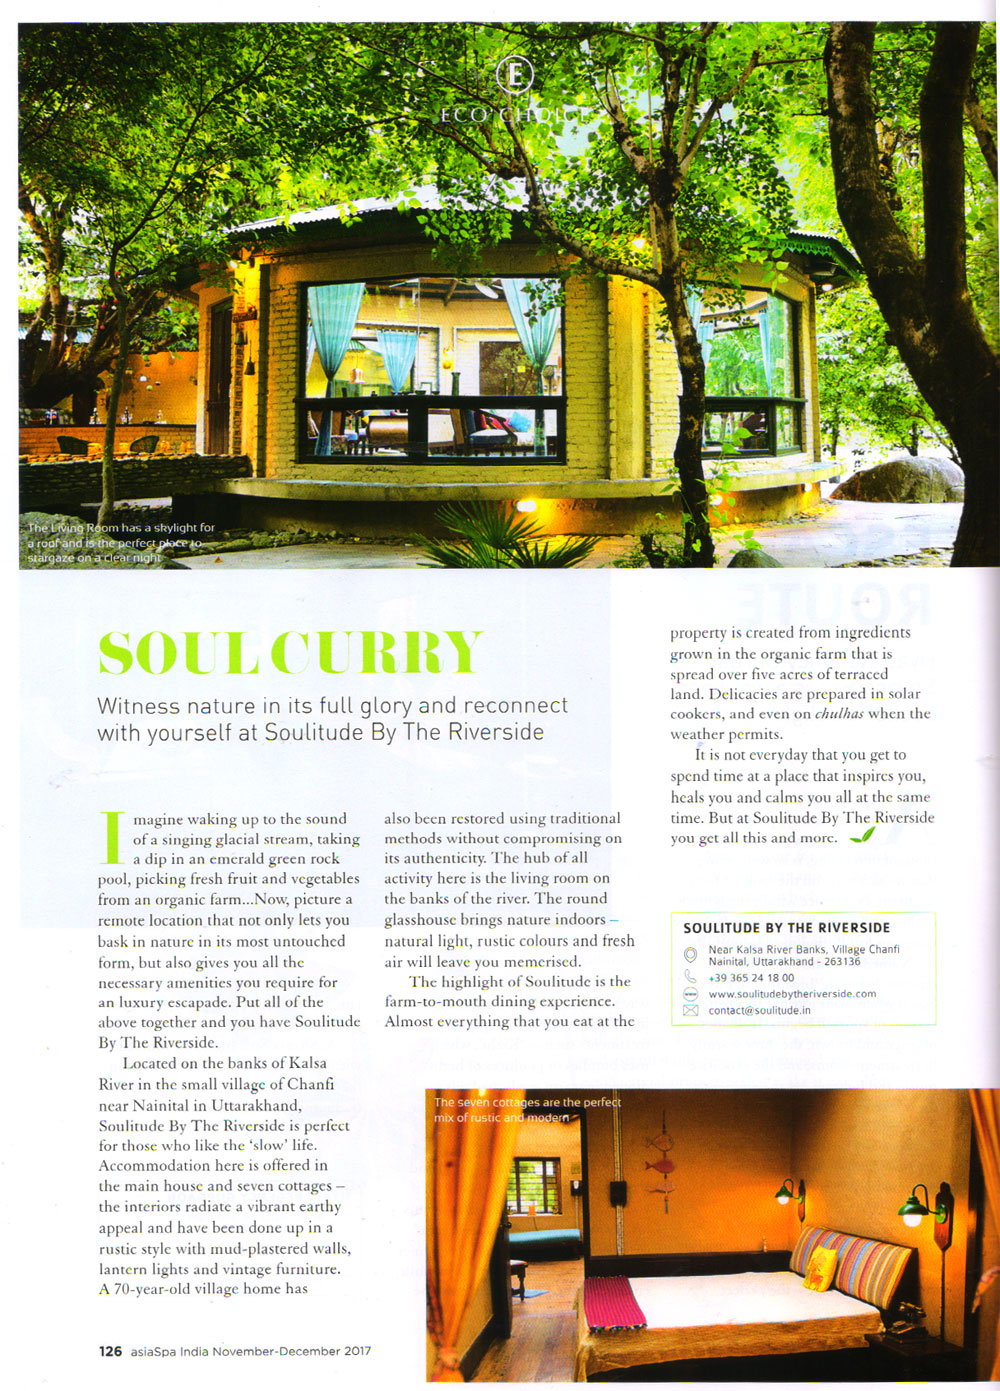 Soulitude featured on asiaSpa India Magazine